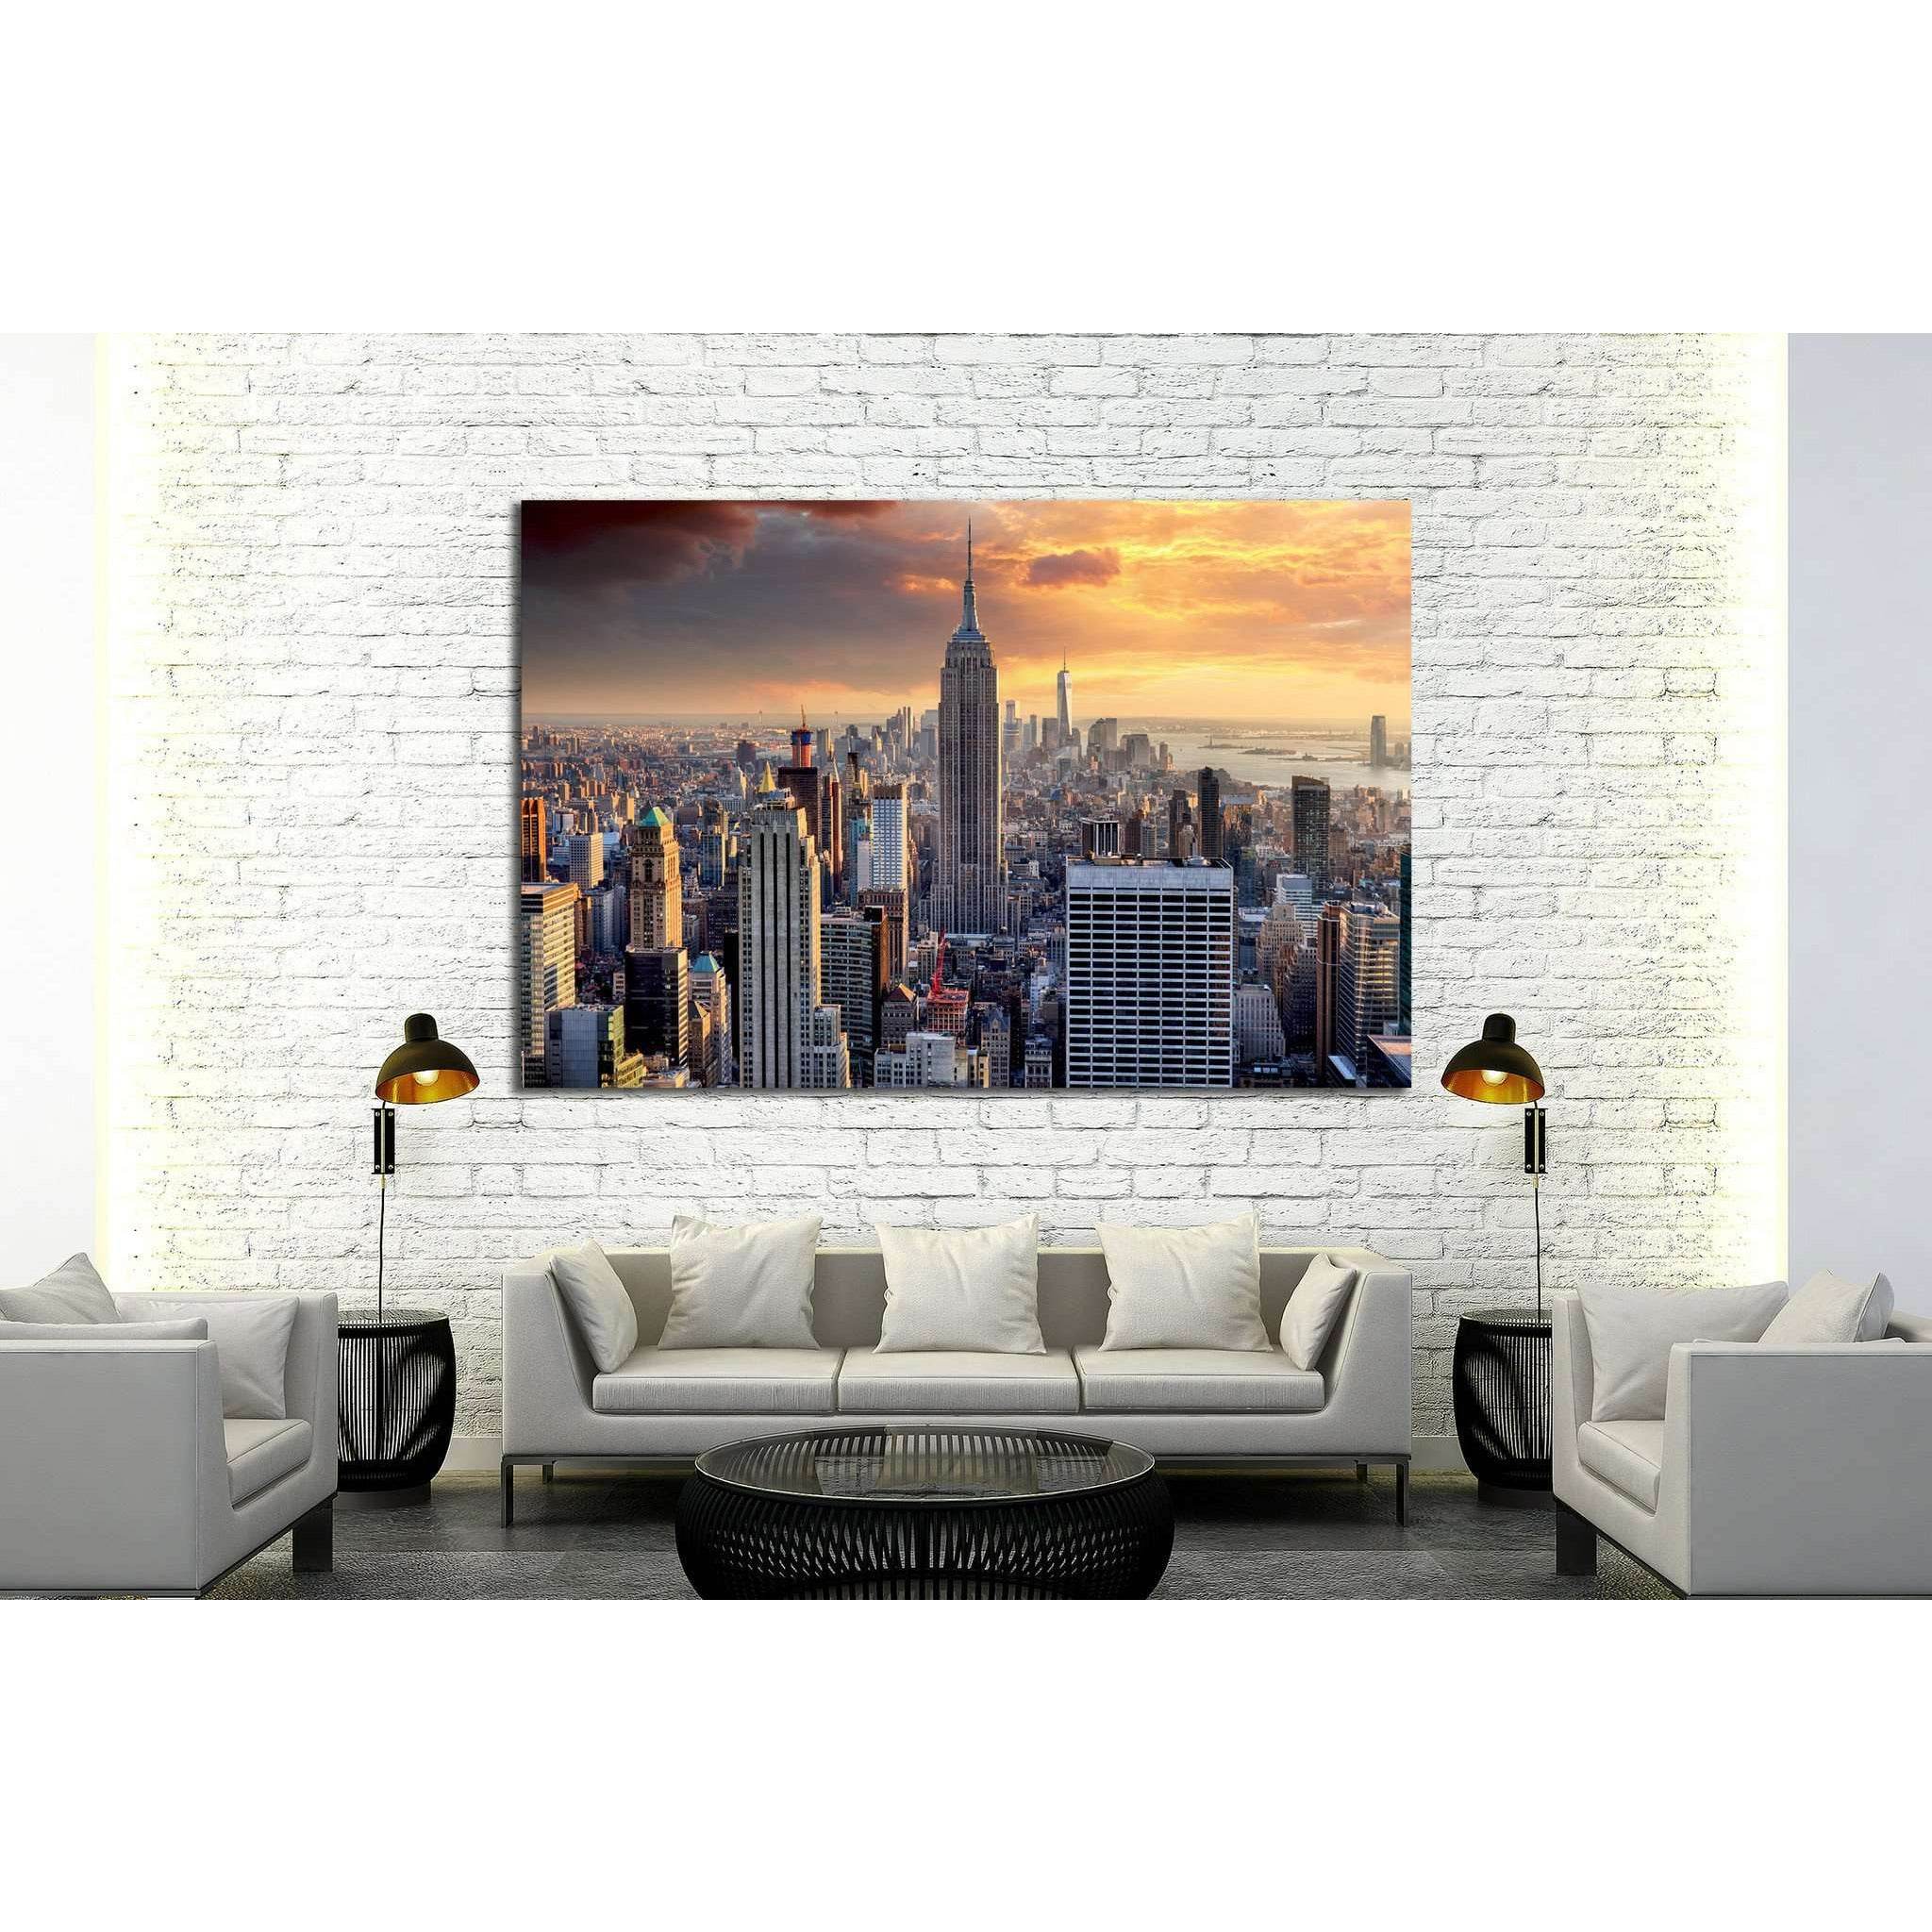 New York skyline at sunset, USA №2072 Ready to Hang Canvas Print